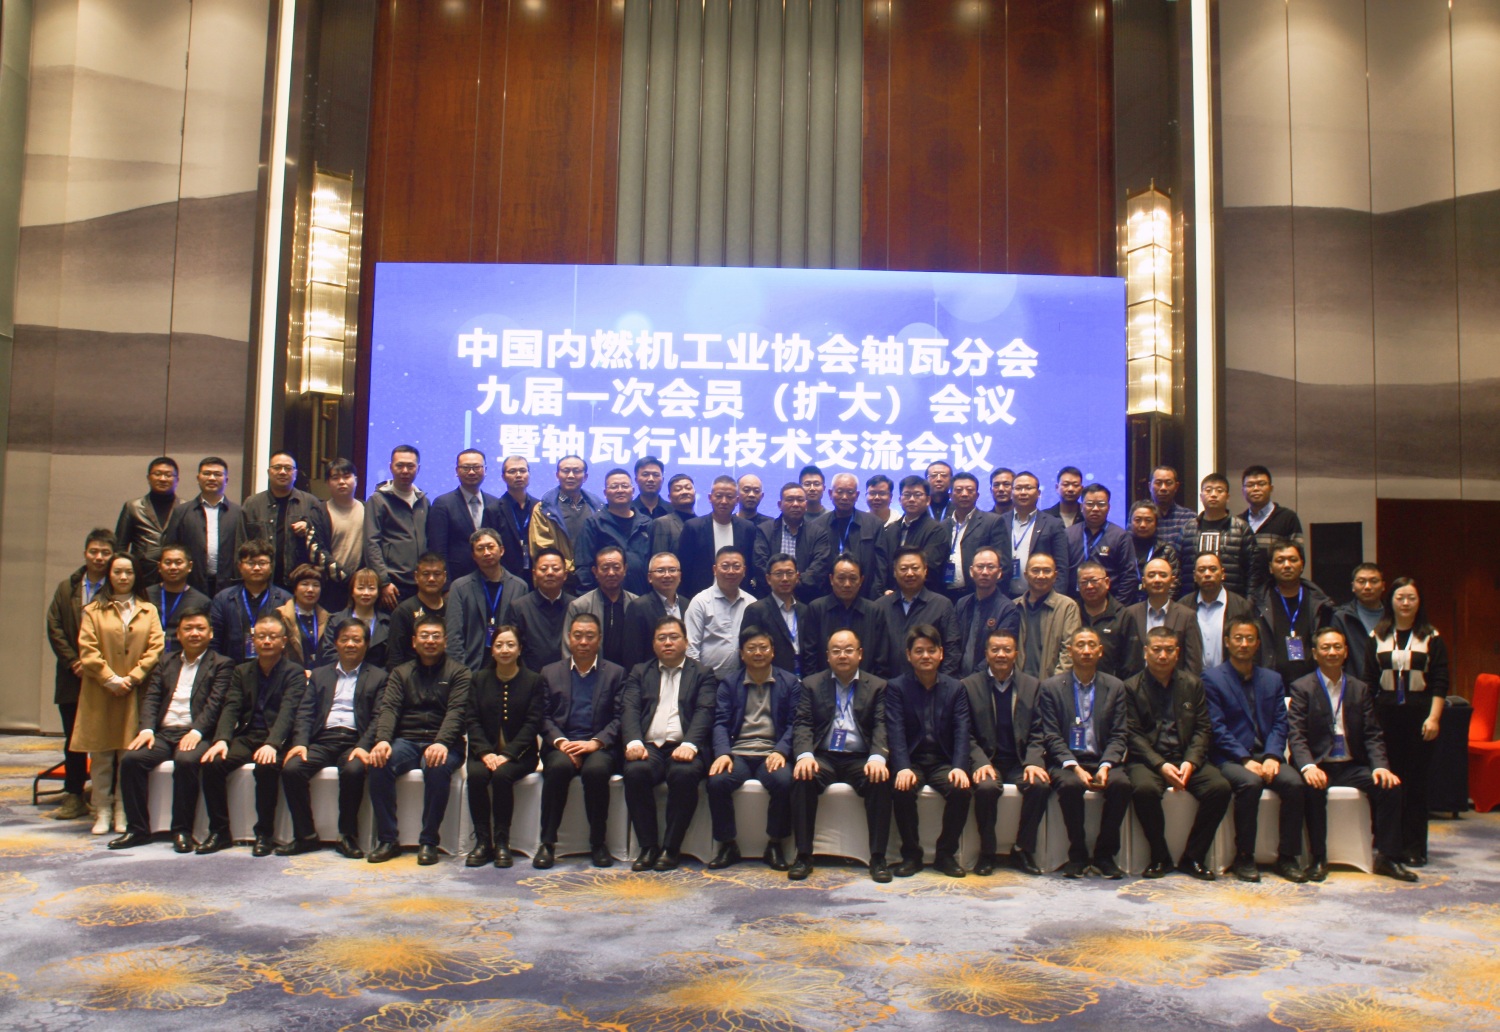 Anhui ၌ တရုတ်ပြည်တွင်းမီးလောင်ခြင်းဆိုင်ရာ စက်ယန္တရားလုပ်ငန်းအဖွဲ့၏ နဝမအကြိမ်မြောက် အဖွဲ့ဝင် (တိုးချဲ့) အစည်းအဝေးကို Anhui ၌ ကျင်းပခဲ့သည်။